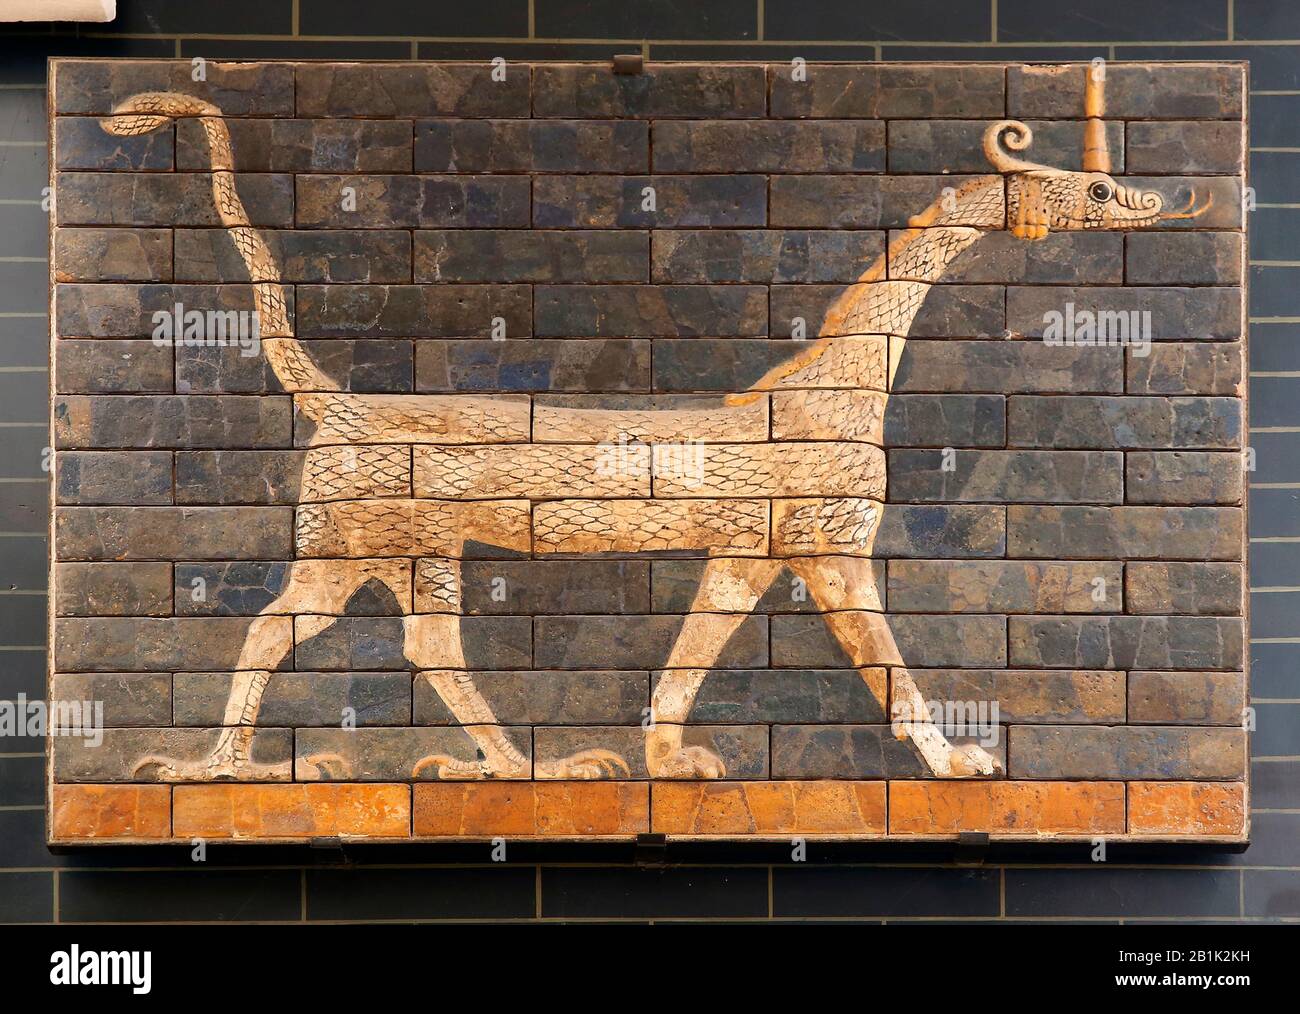 Mushussus (dragons). Ishtar gate. Babylon. Neo-Babylon. 604-562 BC. Glazed Brick. Iraq. Istanbul Archaeoligical Museum. Turkey. Stock Photo